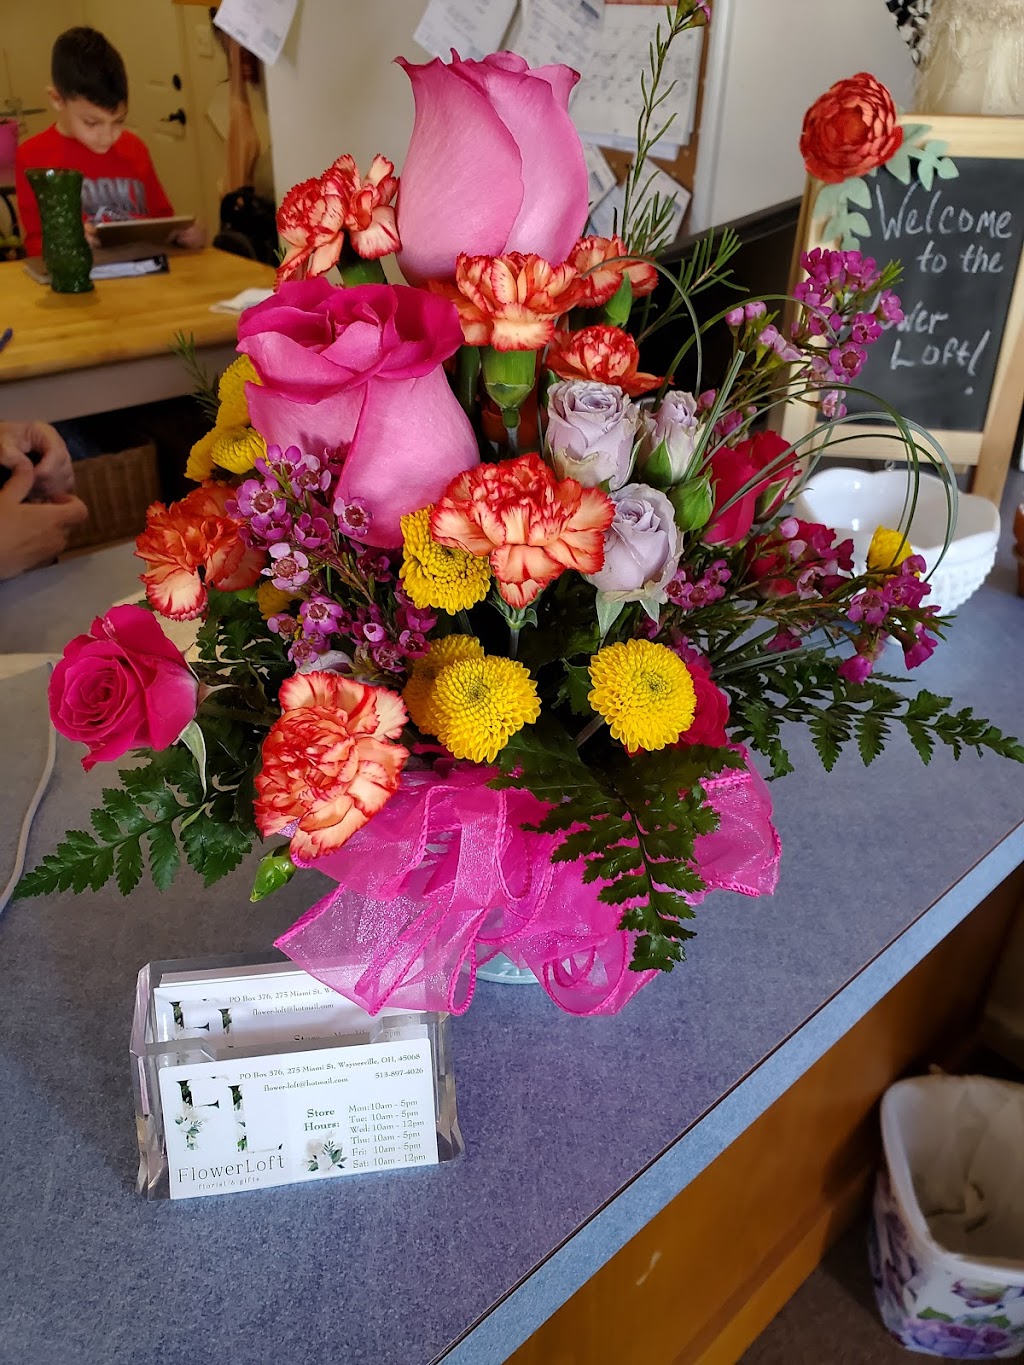 FlowerLoft Florist and Gifts | 275 Miami St, Waynesville, OH 45068 | Phone: (513) 897-4026